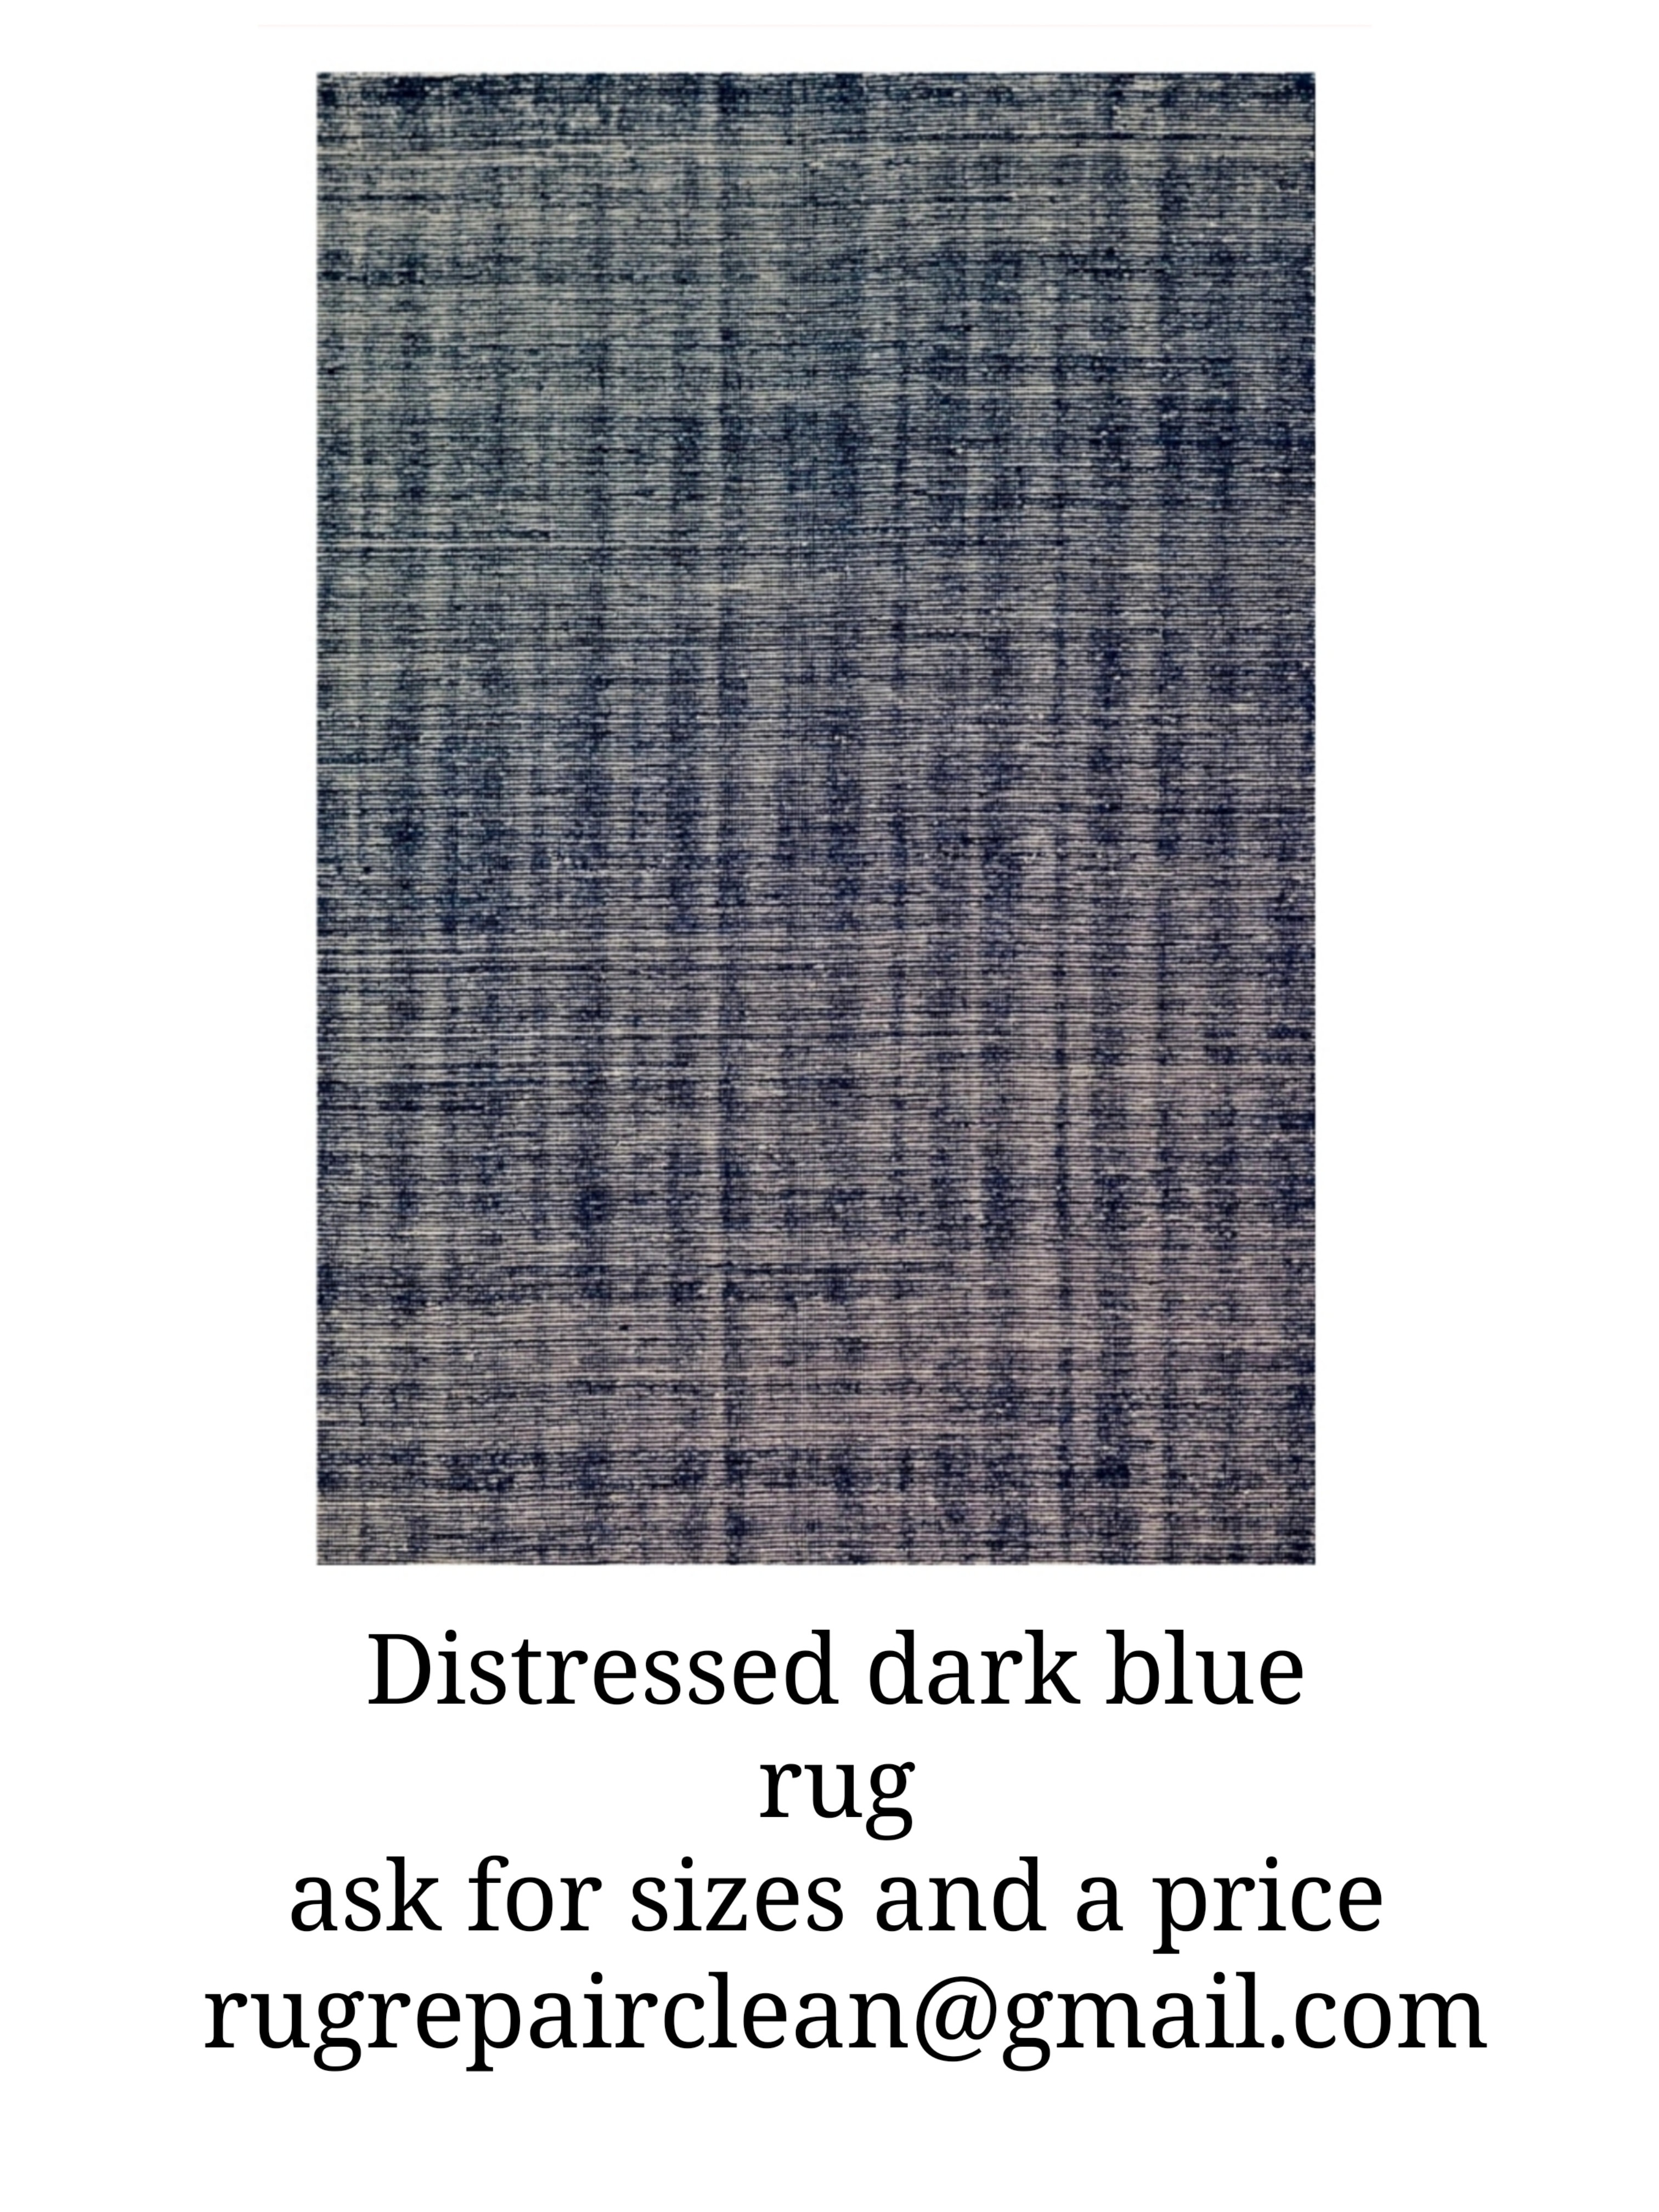 Dark blue distressed rug